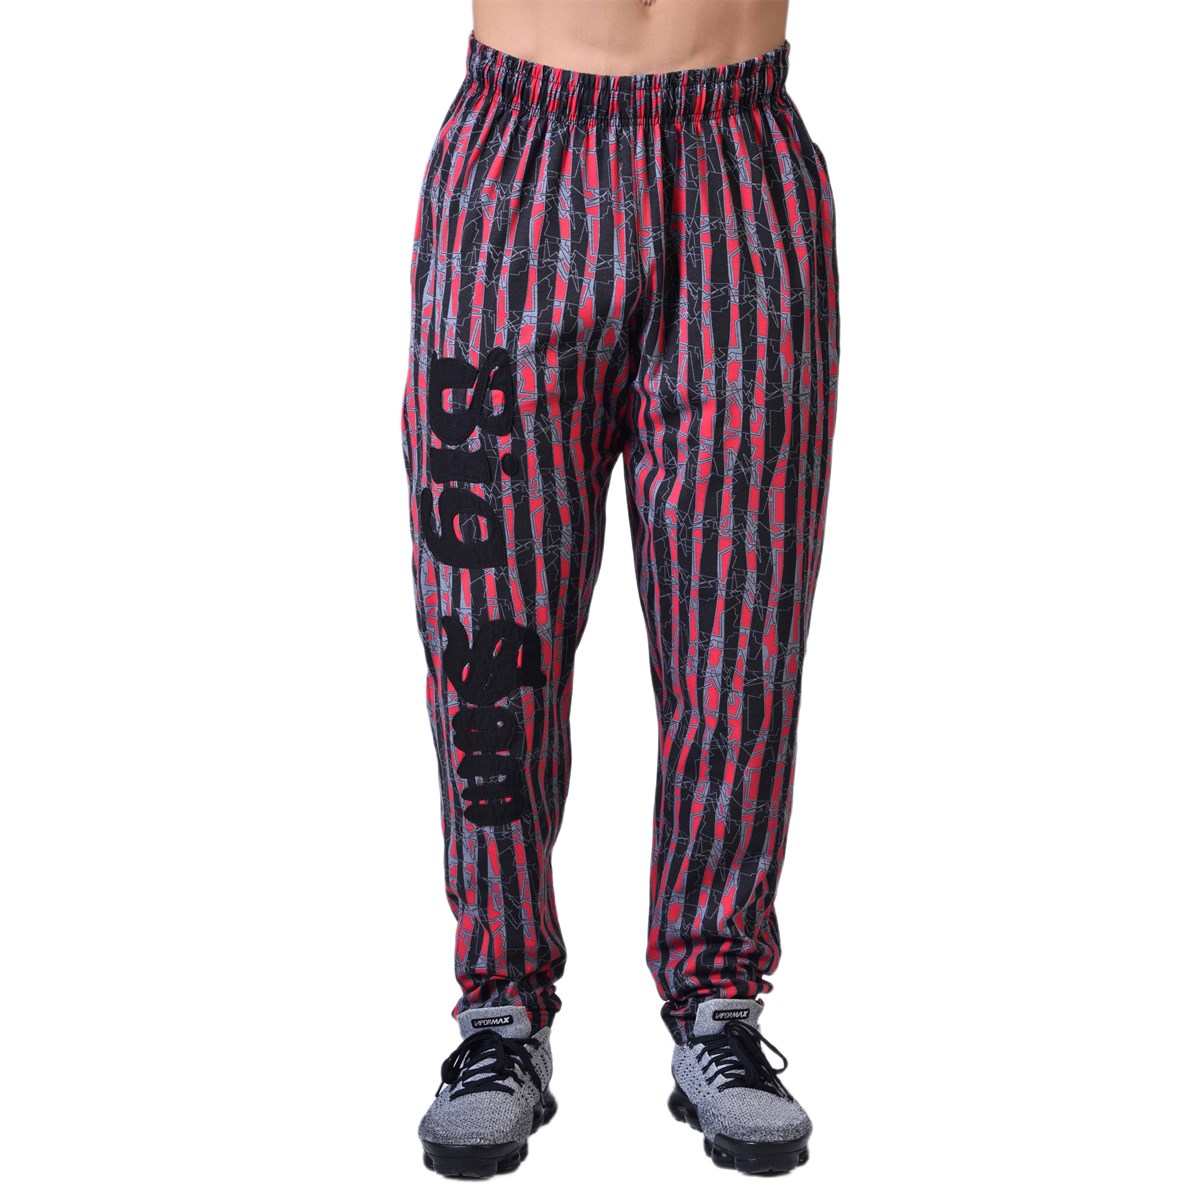 Men's Baggy Gym Pants with Pockets | bigsam.com